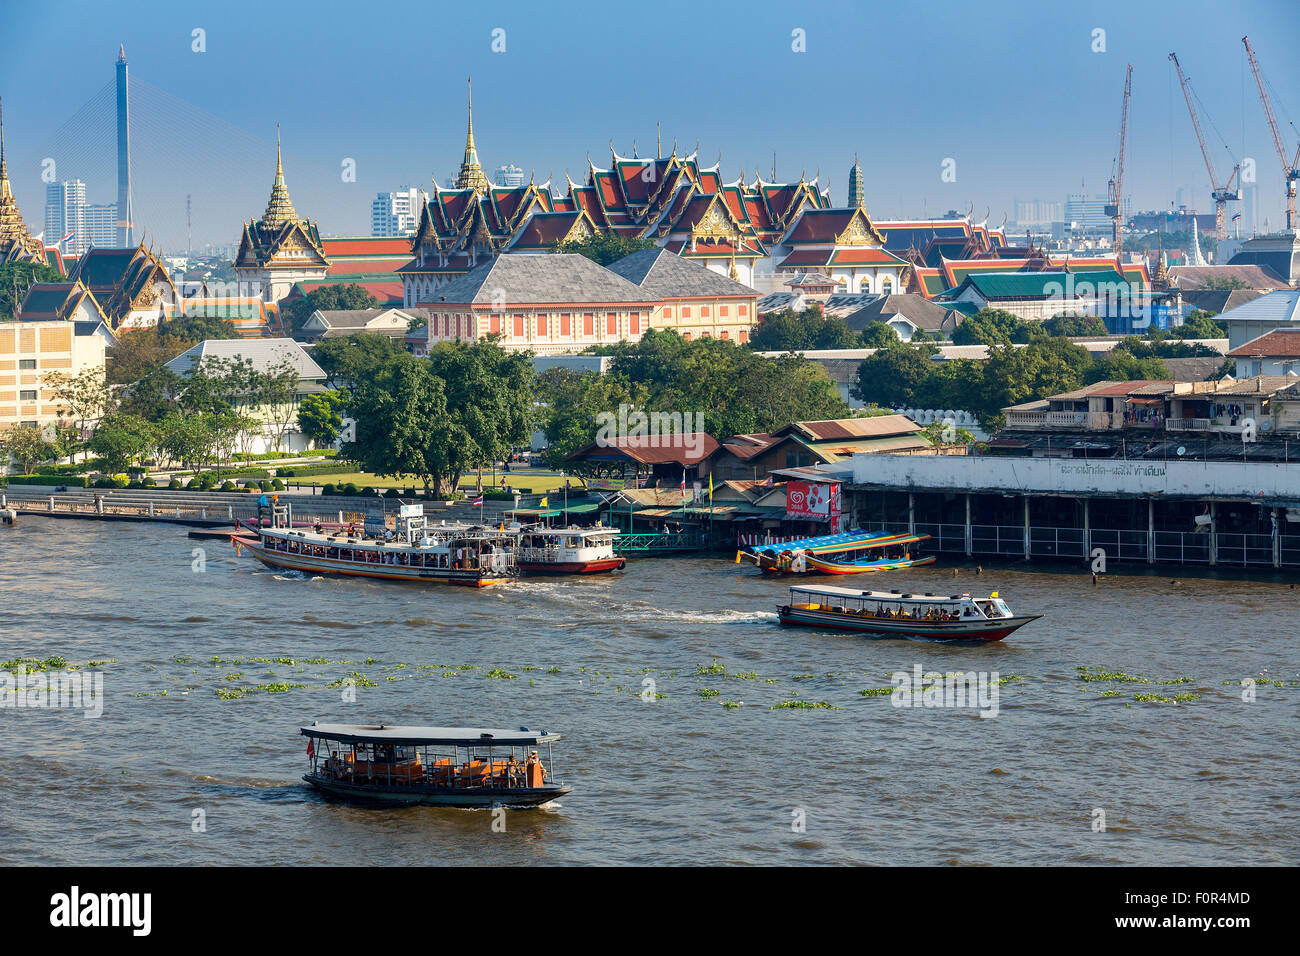 Thailande, Bangkok, le trafic sur la rivière Chao Phraya Banque D'Images